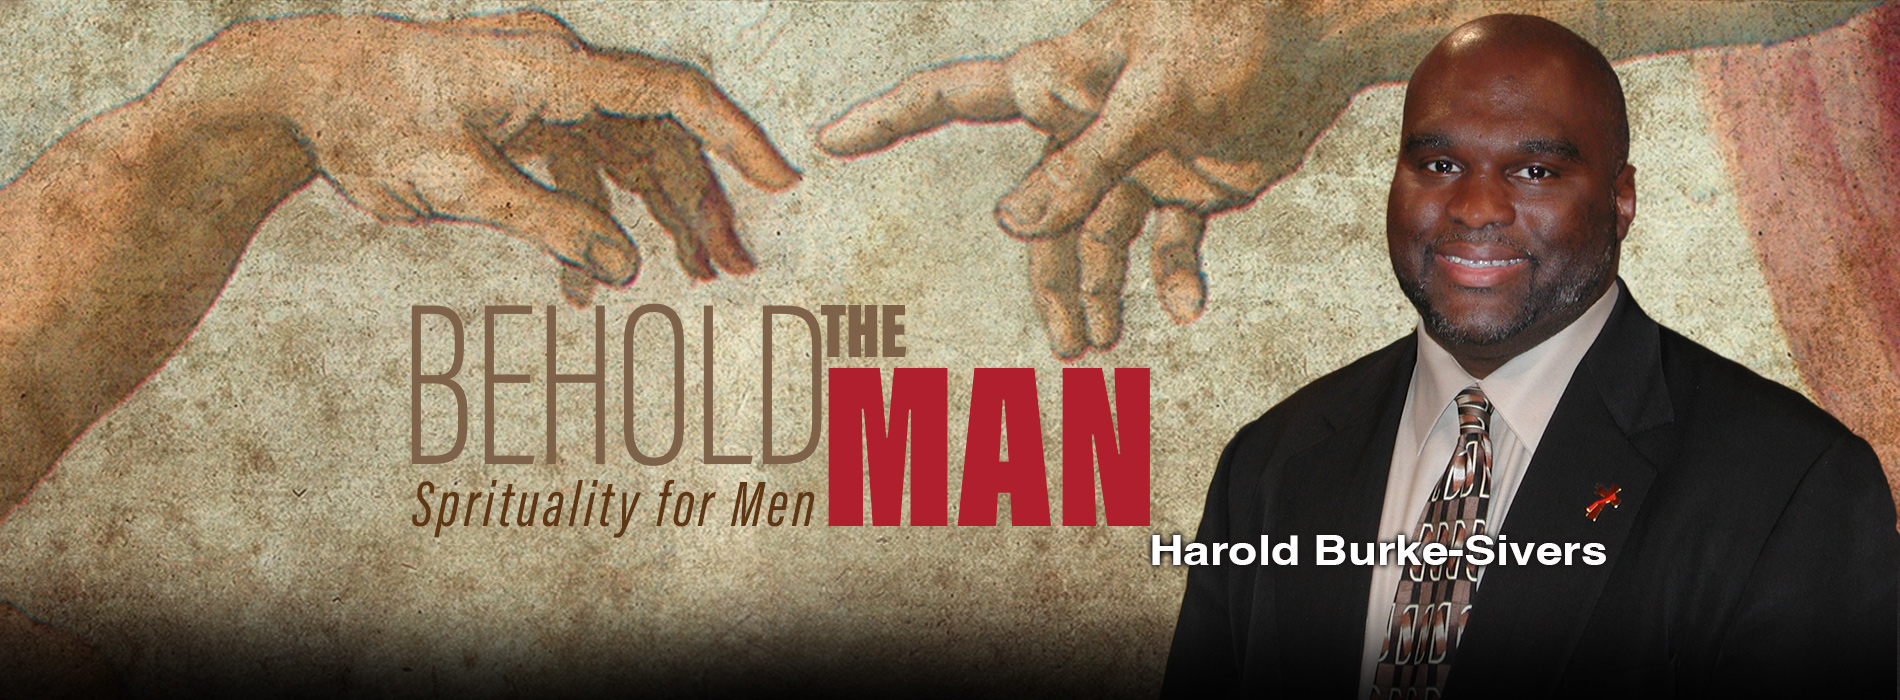 BEHOLD THE MAN: SPIRITUALITY FOR MEN